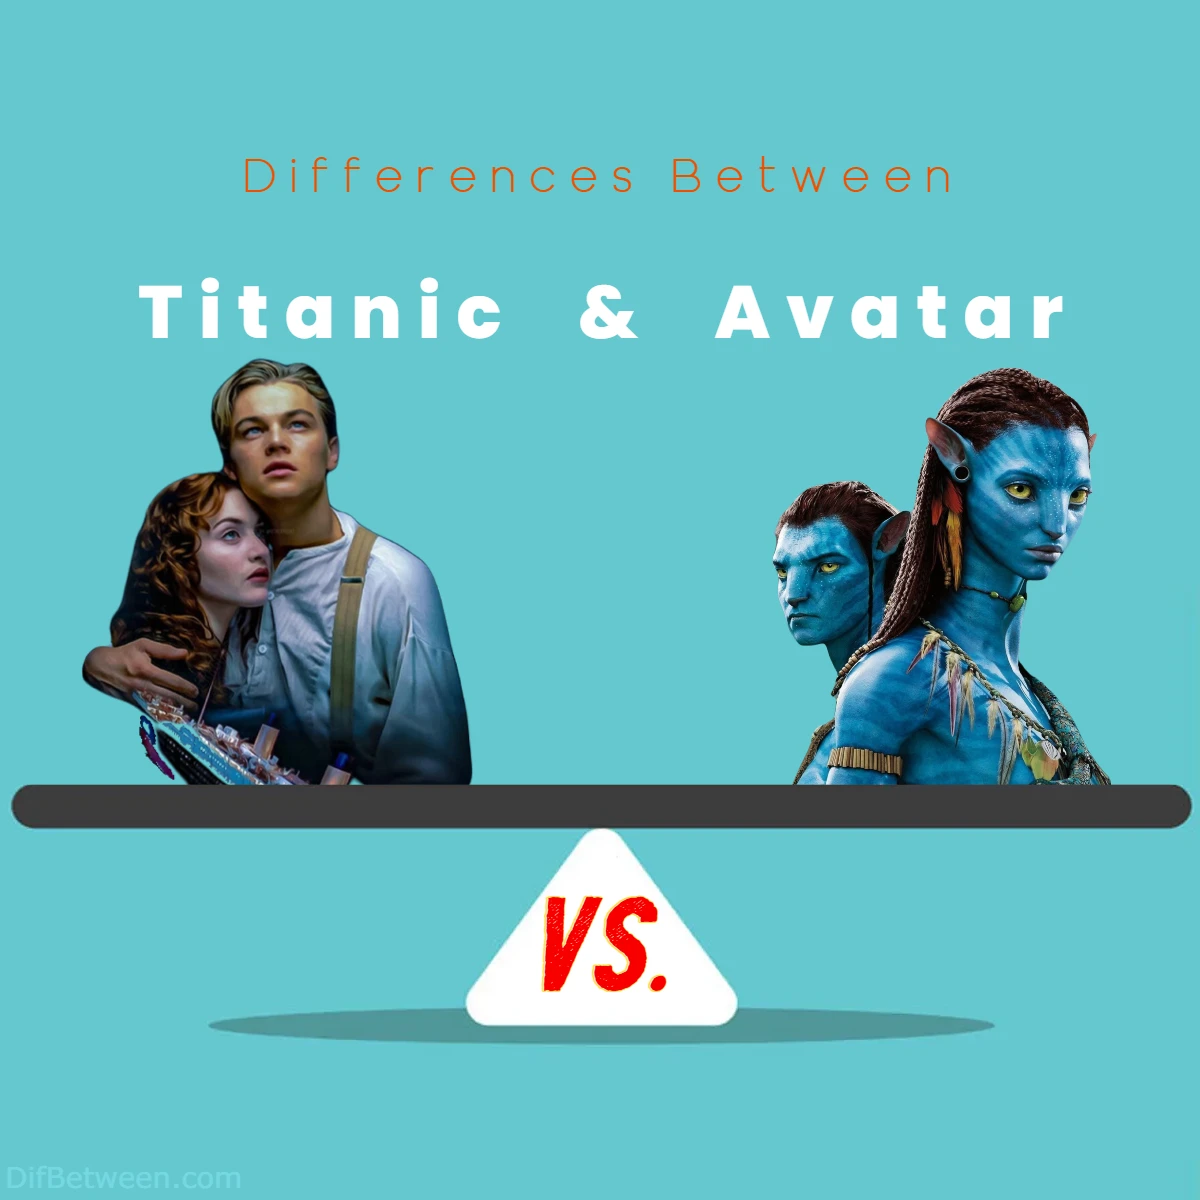 Differences Between Titanic vs Avatar